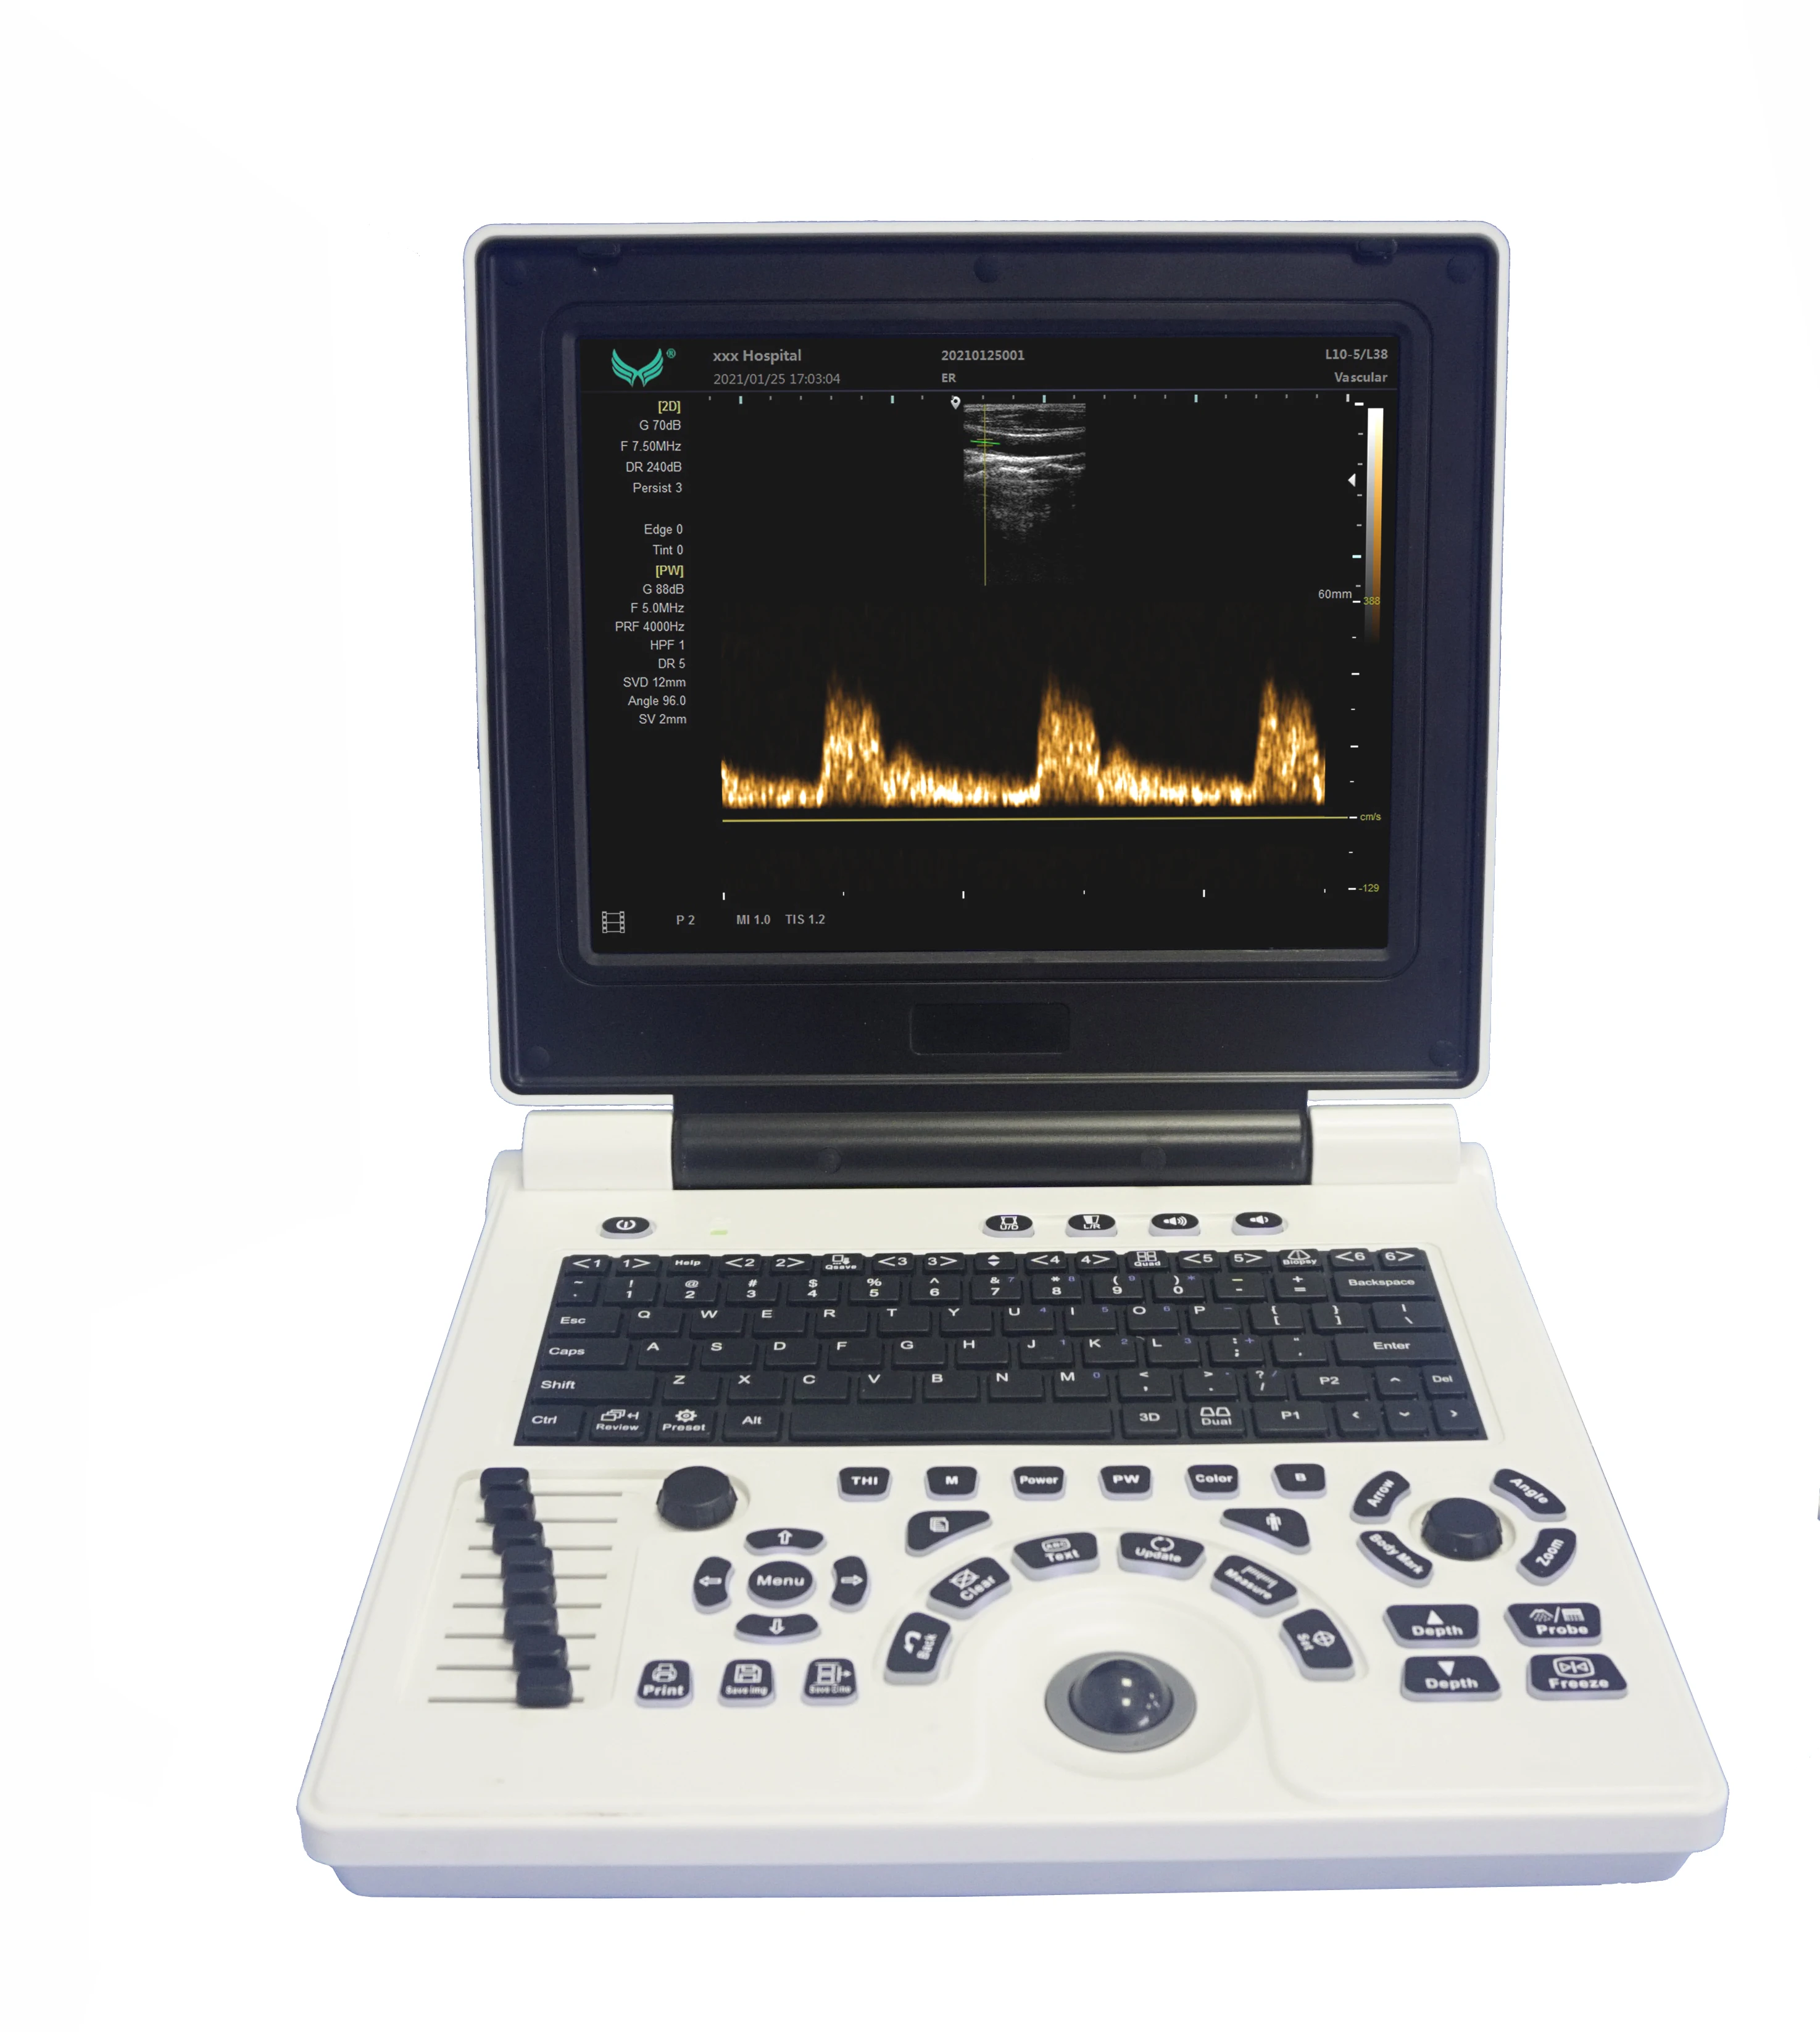 PW Laptop Ultrasound Machines Black And White THI Imaging Technology